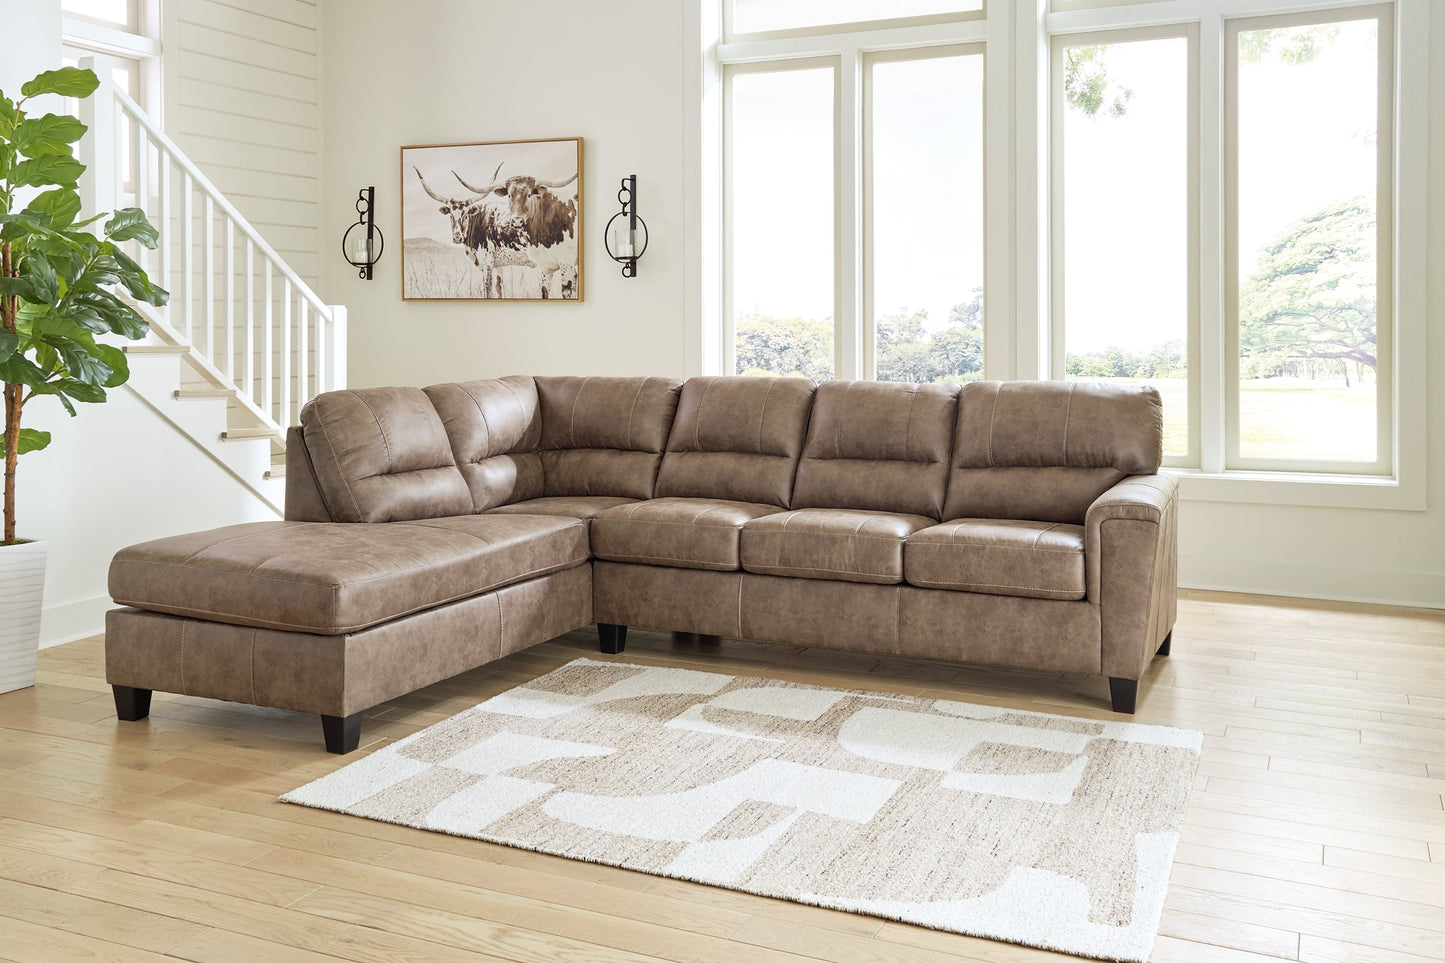 Navi 2-Piece Sectional Sofa Chaise at Cloud 9 Mattress & Furniture furniture, home furnishing, home decor